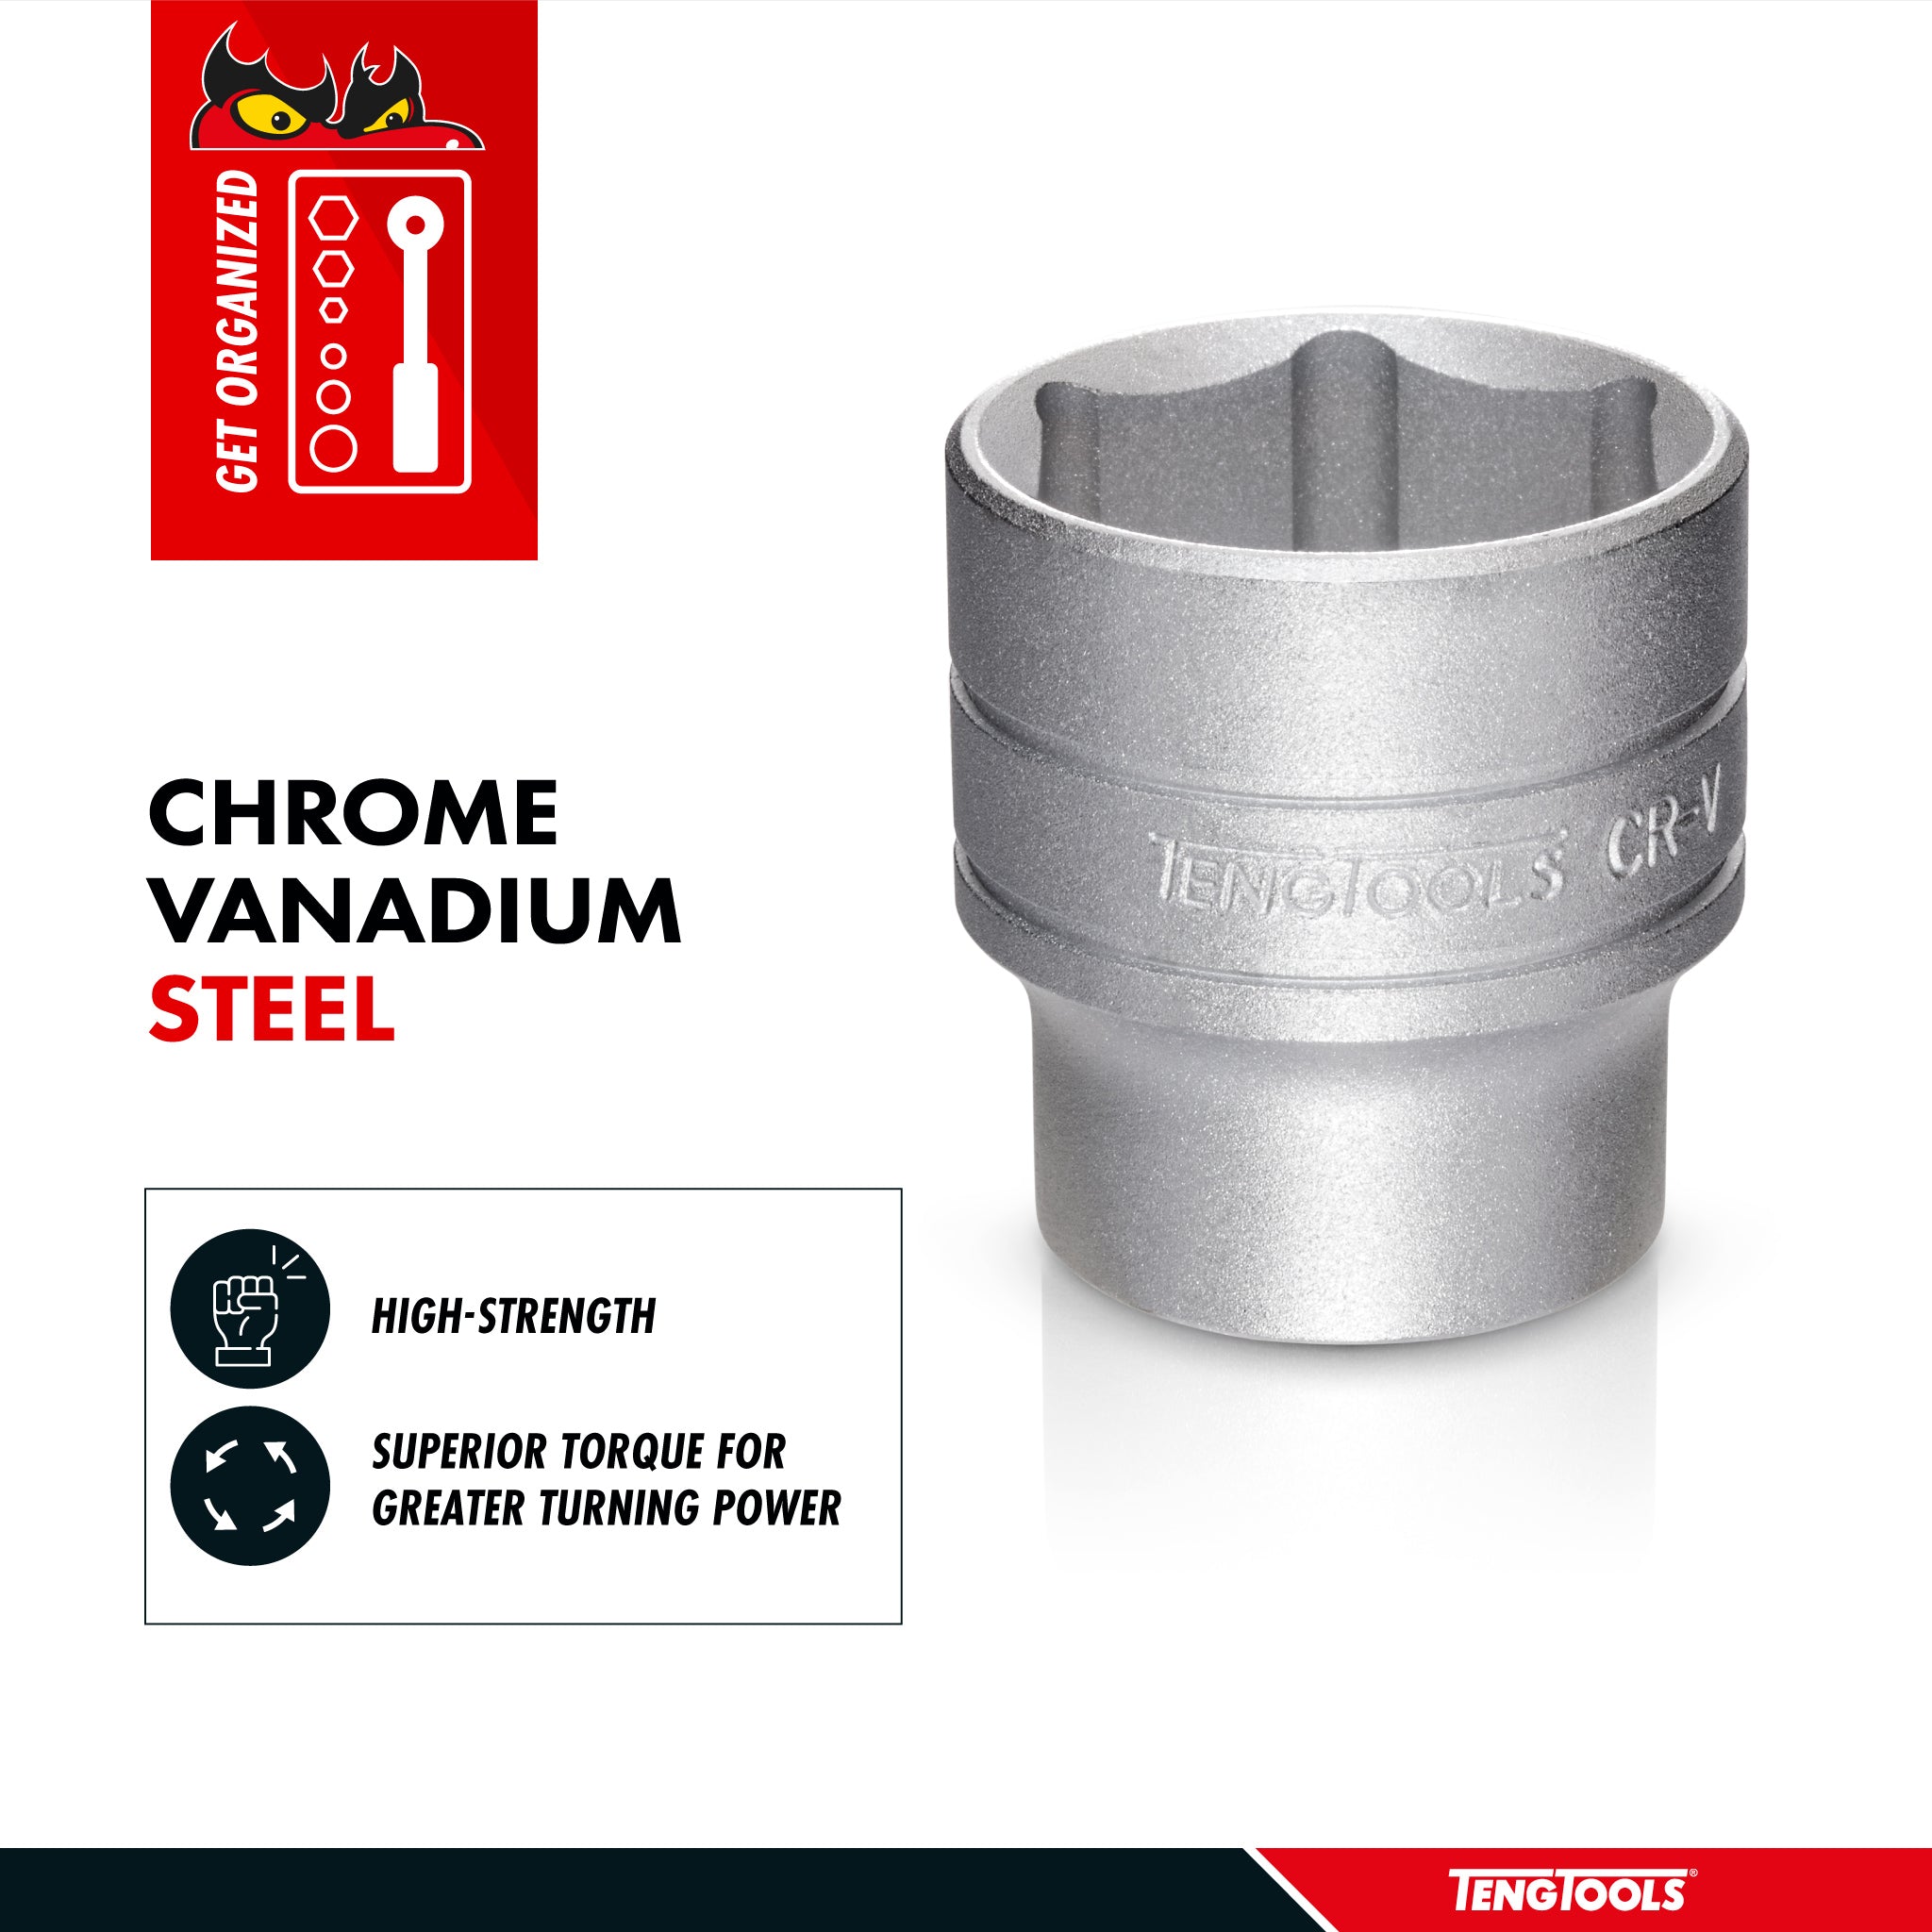 Teng Tools 1/4 Inch Drive 6 Point SAE Shallow Chrome Vanadium Sockets - 7/32